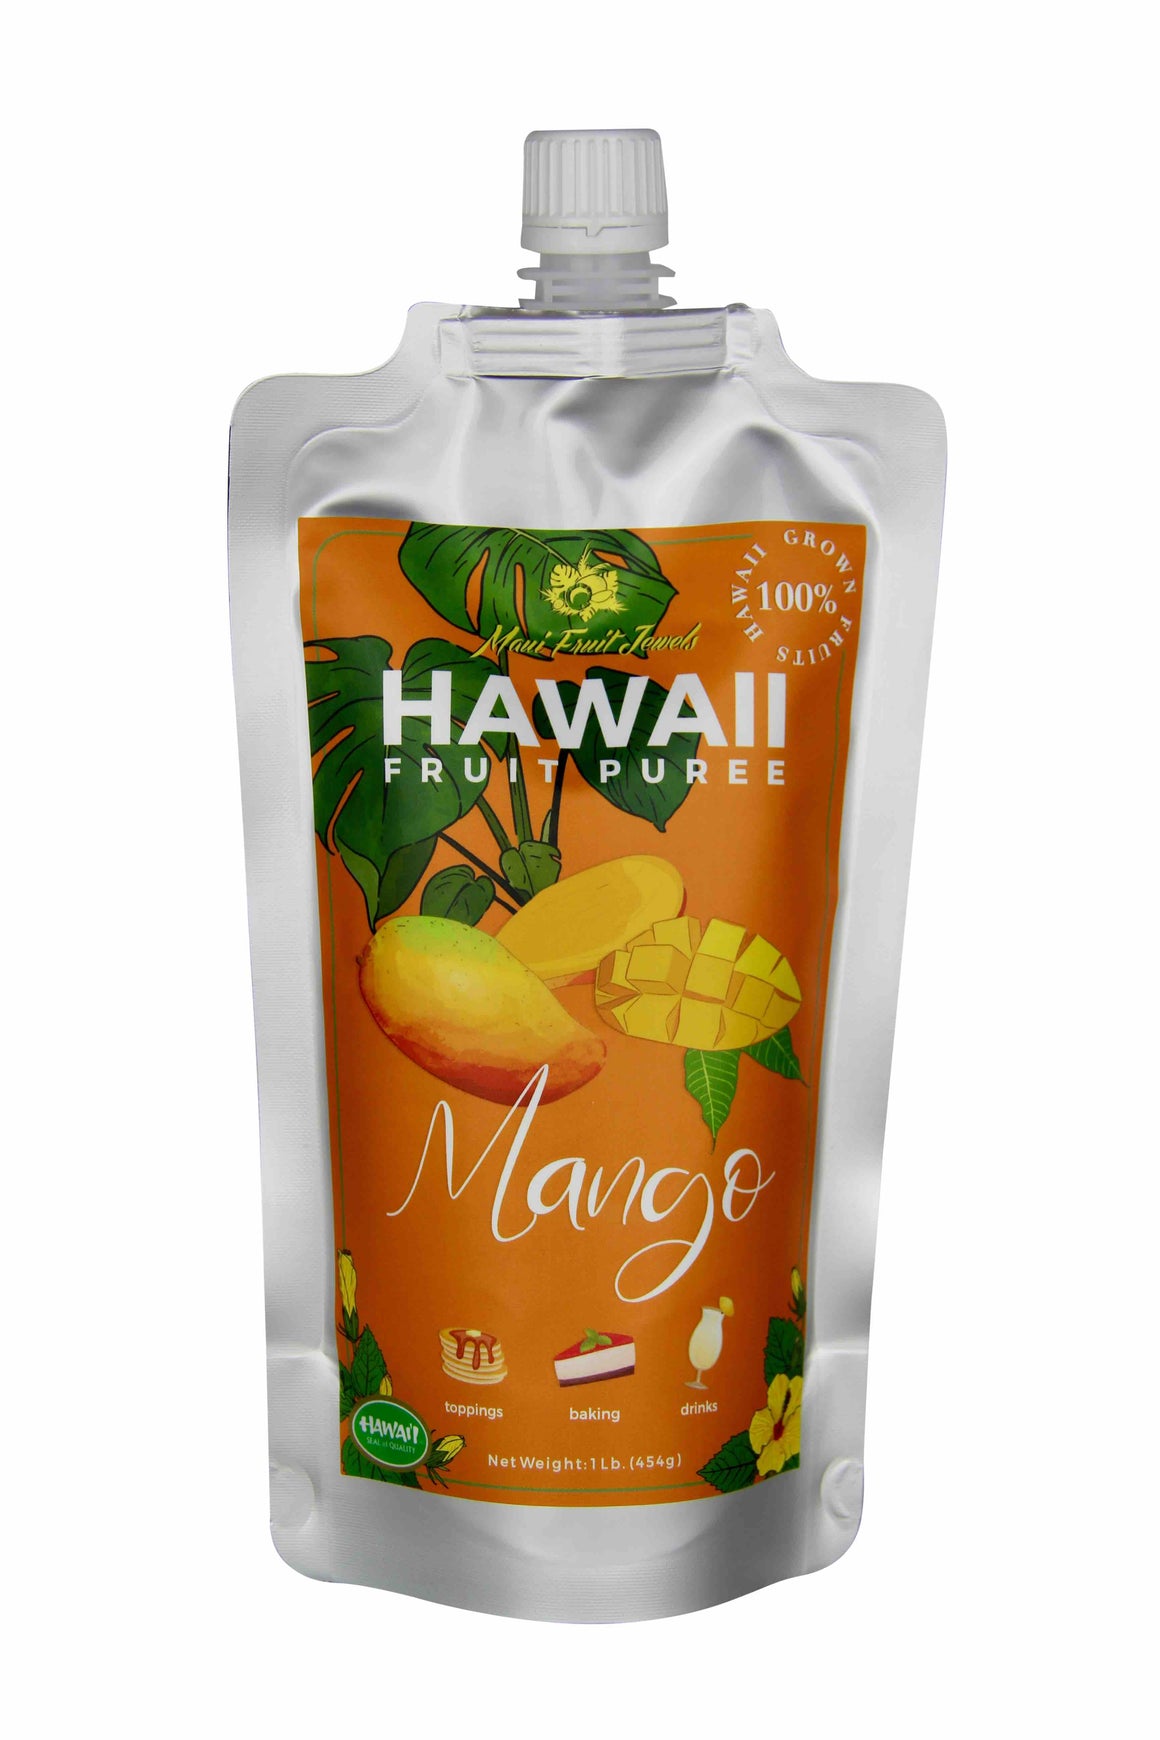 Hawaii Mango Fruit Puree